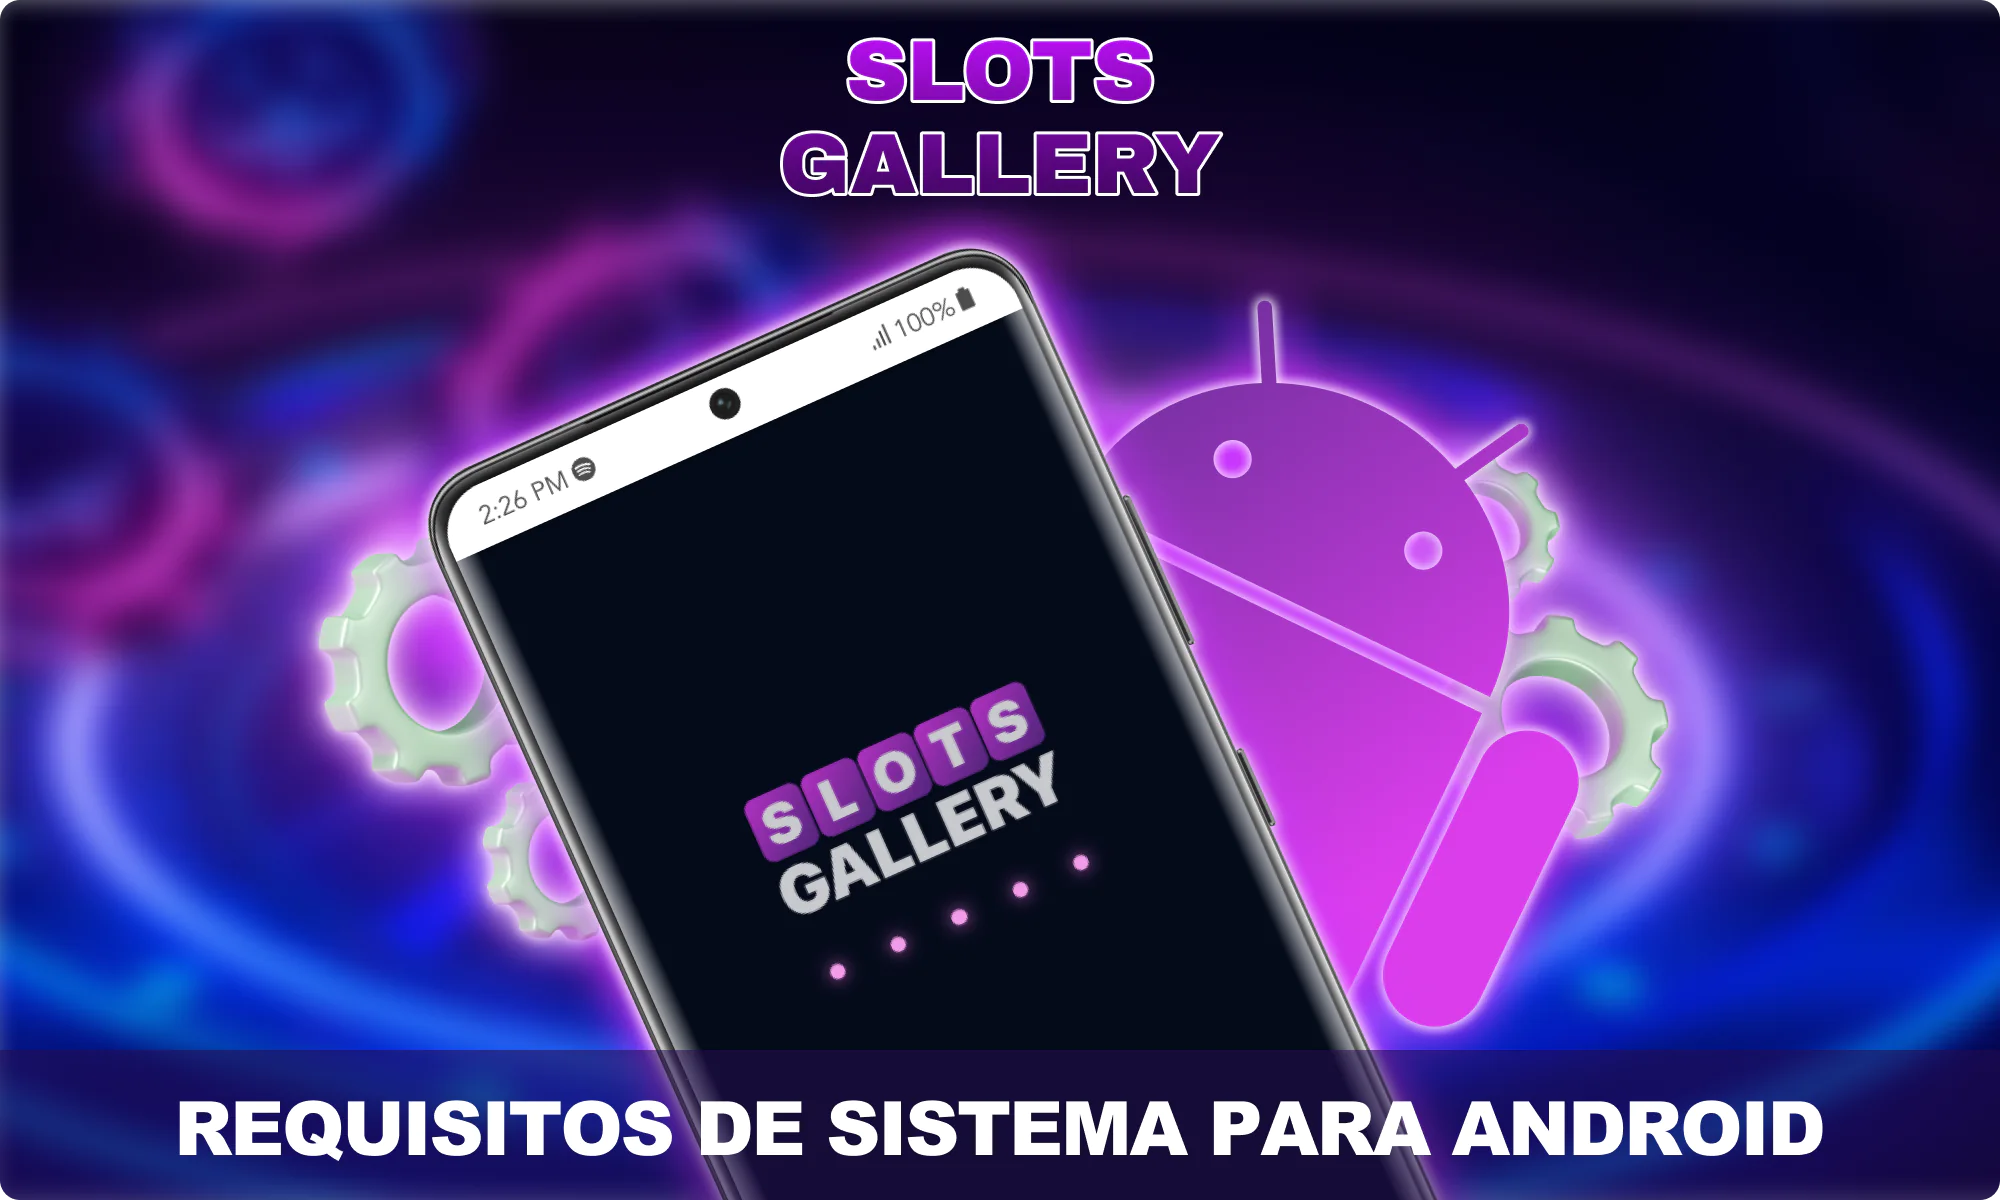 Requisitos de sistema para o aplicativo no Android - Slots Gallery Brasil